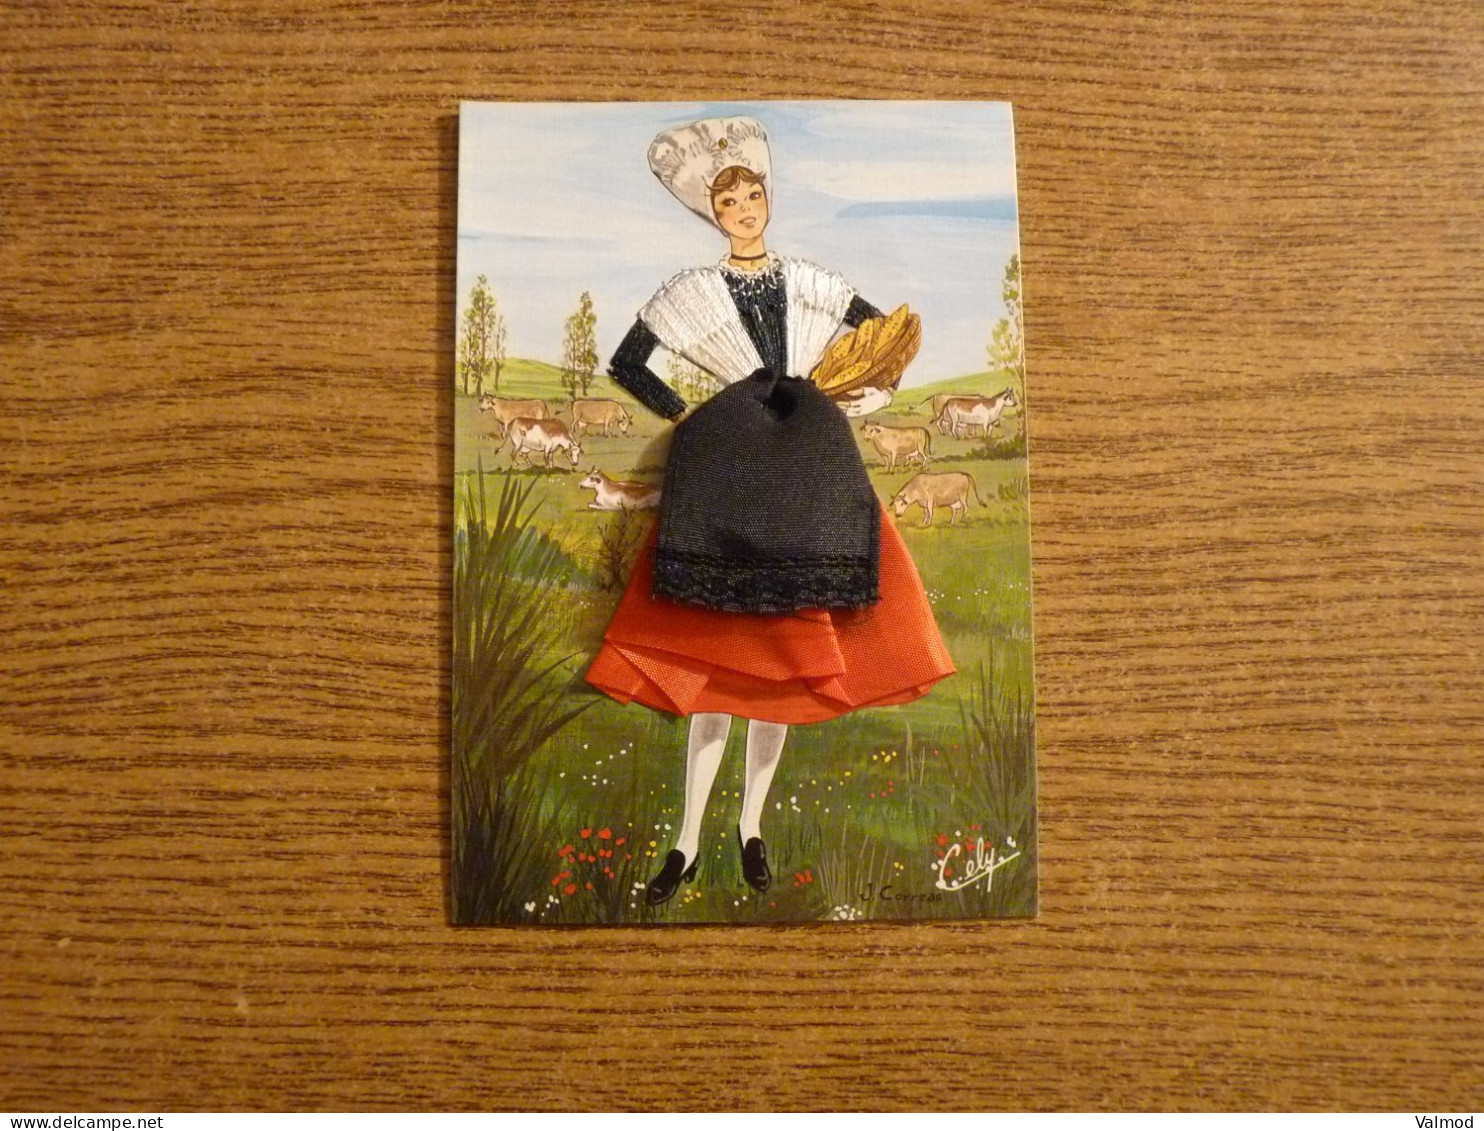 Carte Brodée "Charentaise" - Illustrateur J. Correas - Jeune Femme Costume Brodé/Tissu- 10,5x15cm Env. - Brodées